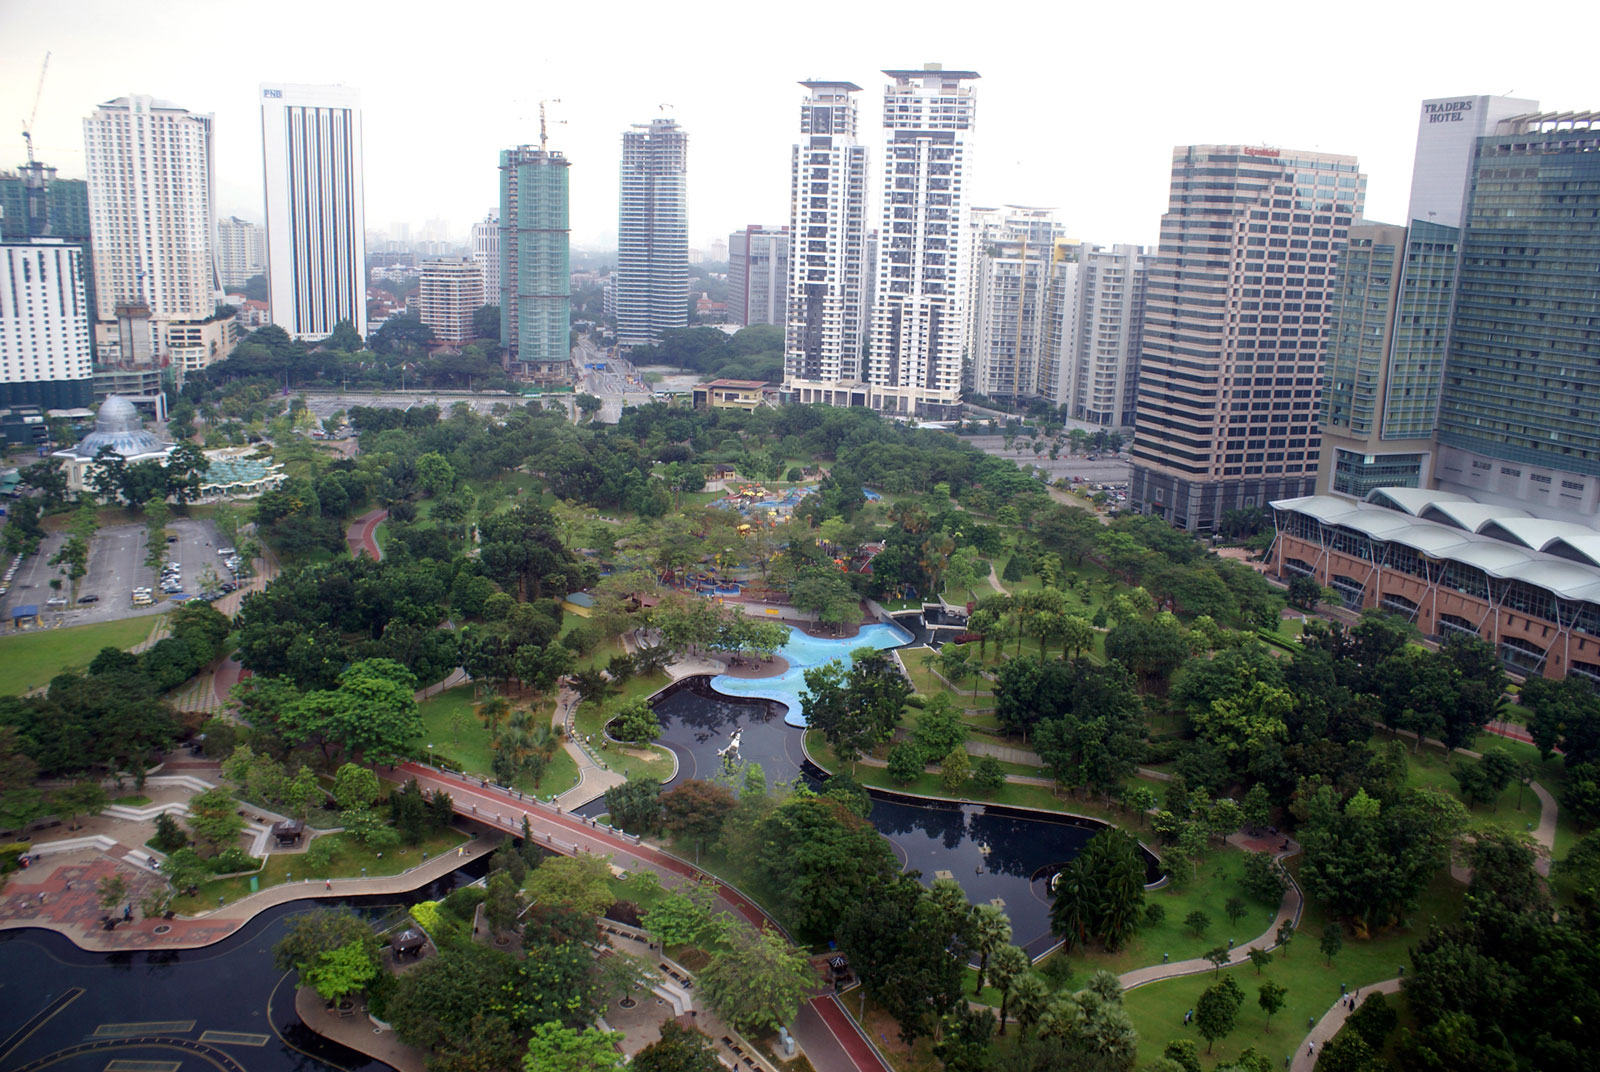 Kuala Lumpur City Centre Park (1998), based on a design by Burle Marx, Kuala Lumpur, Malaysia, May 19, 2008